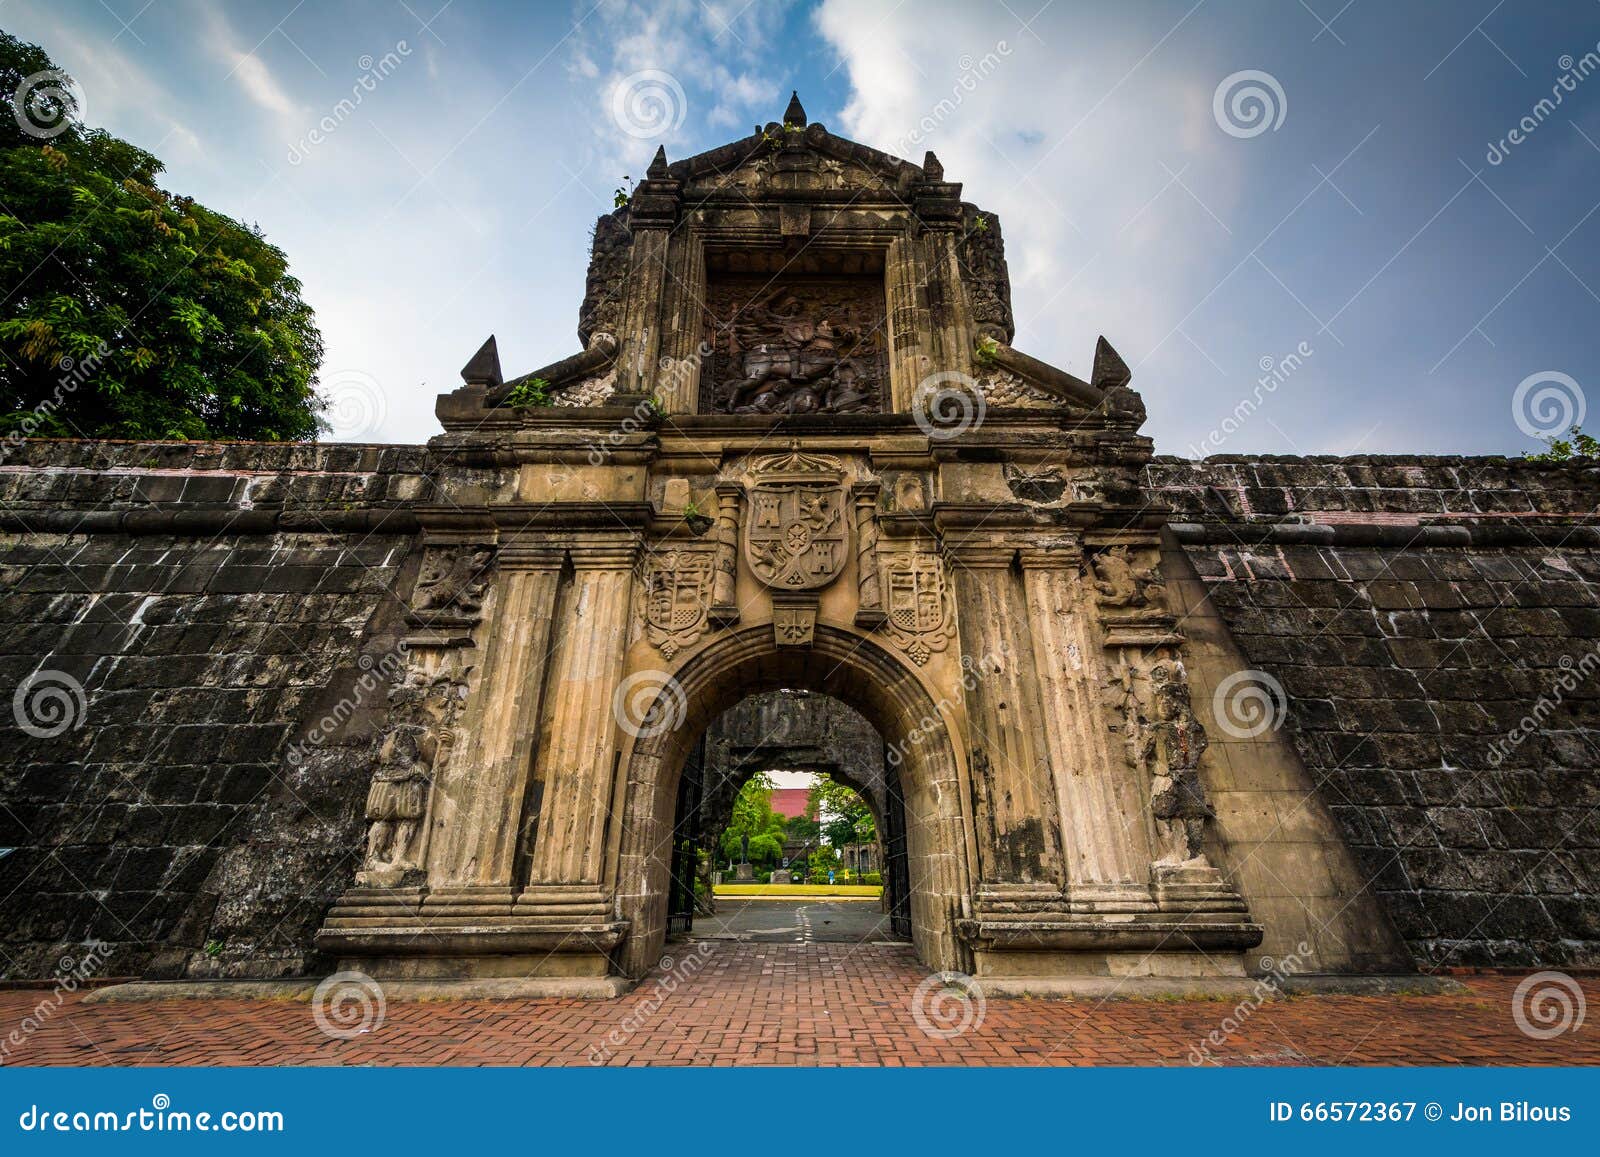 entrance to fort santiago, in intramuros, manila, the philippine